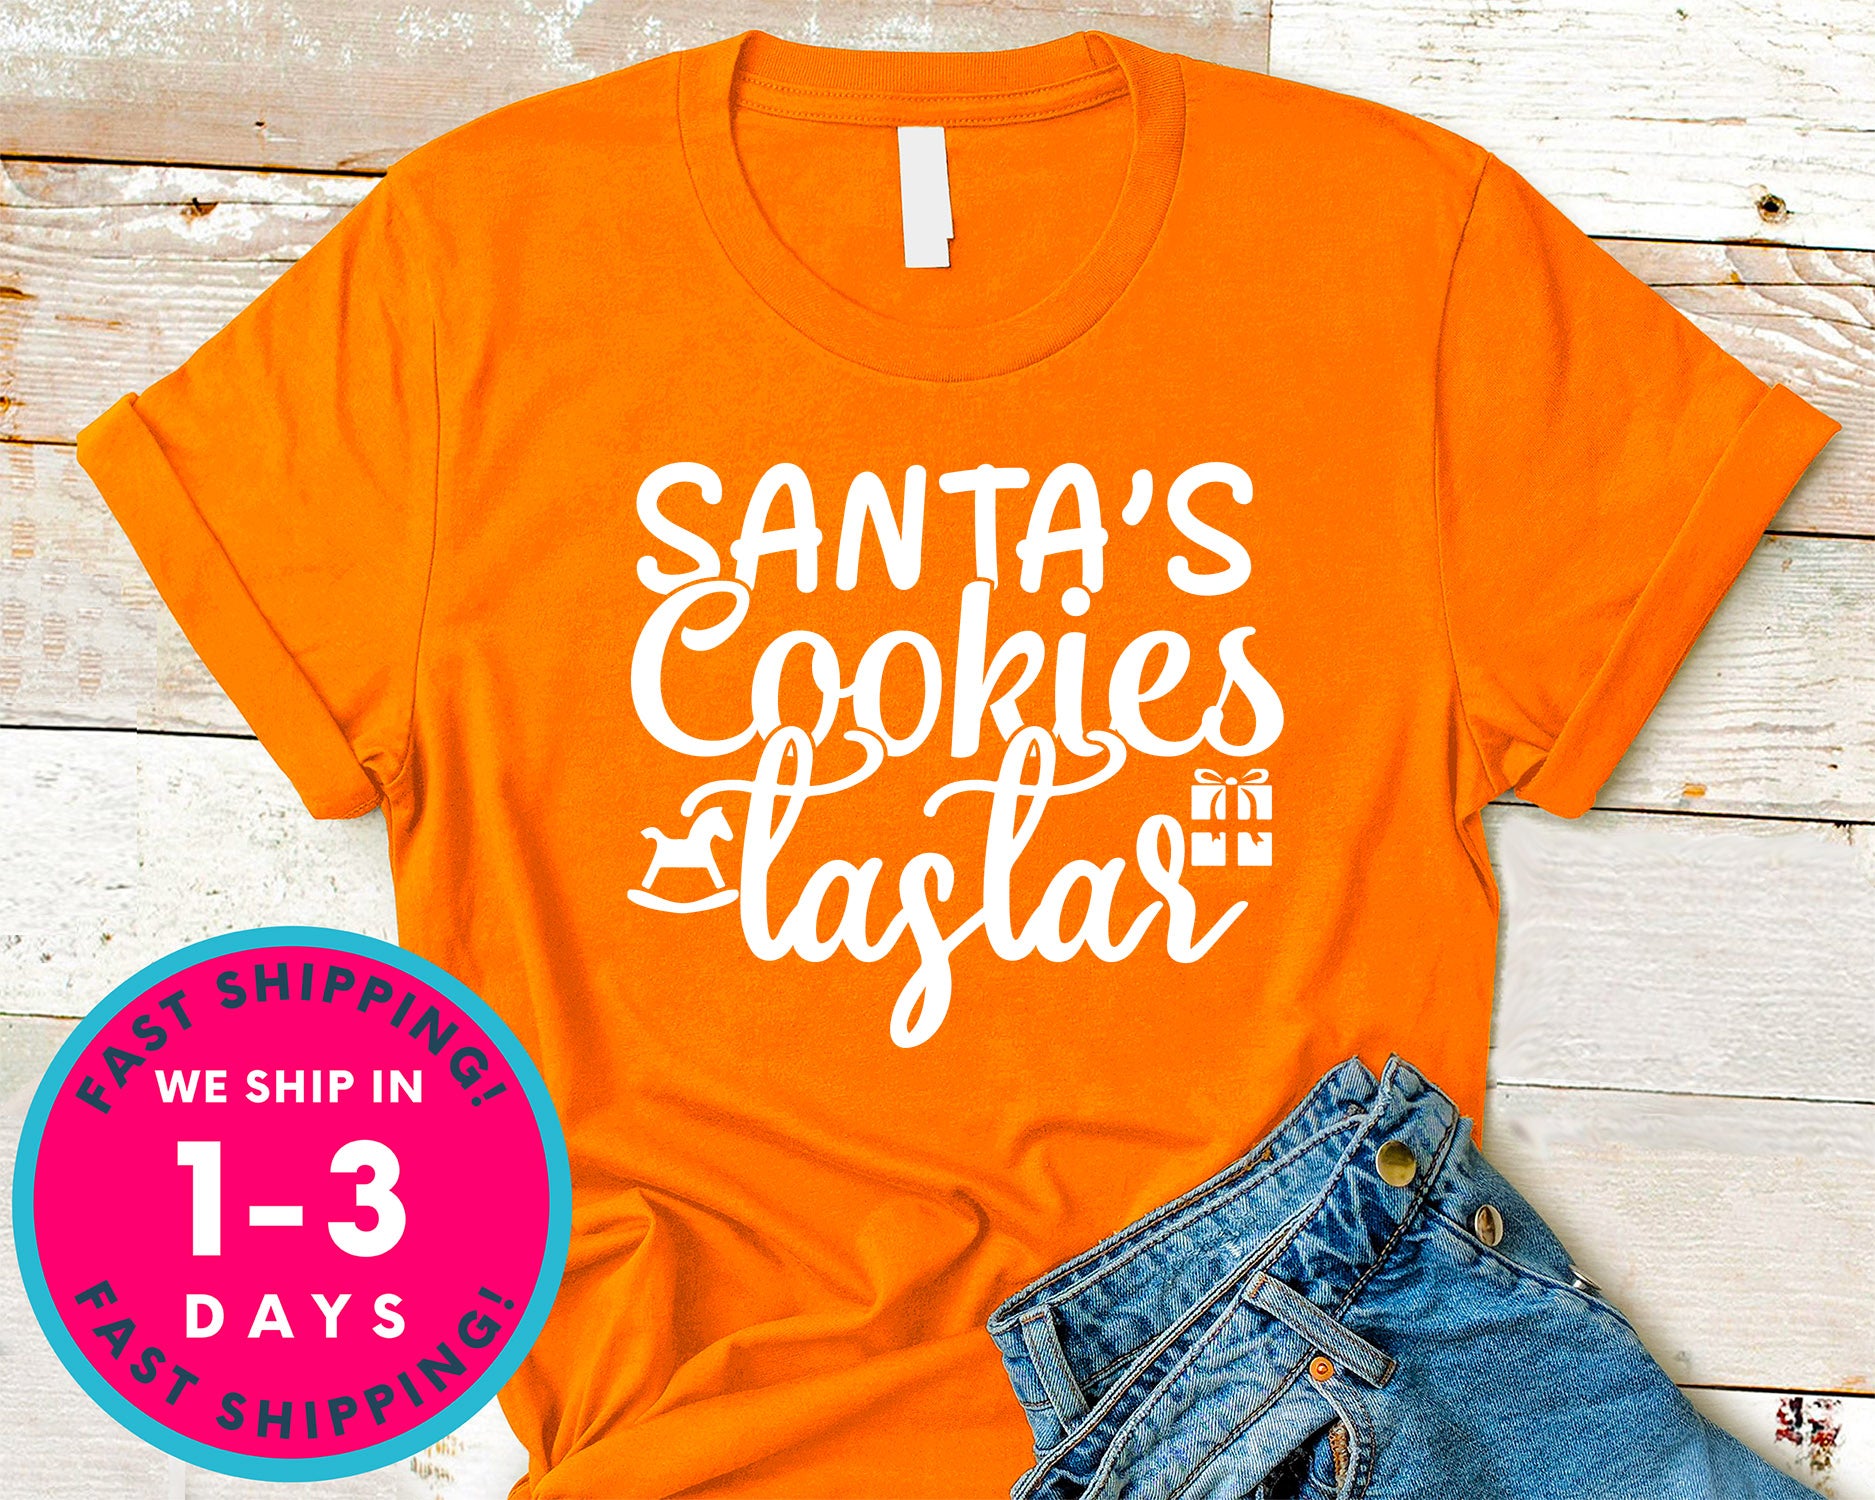 Santa's Tastar Cookies